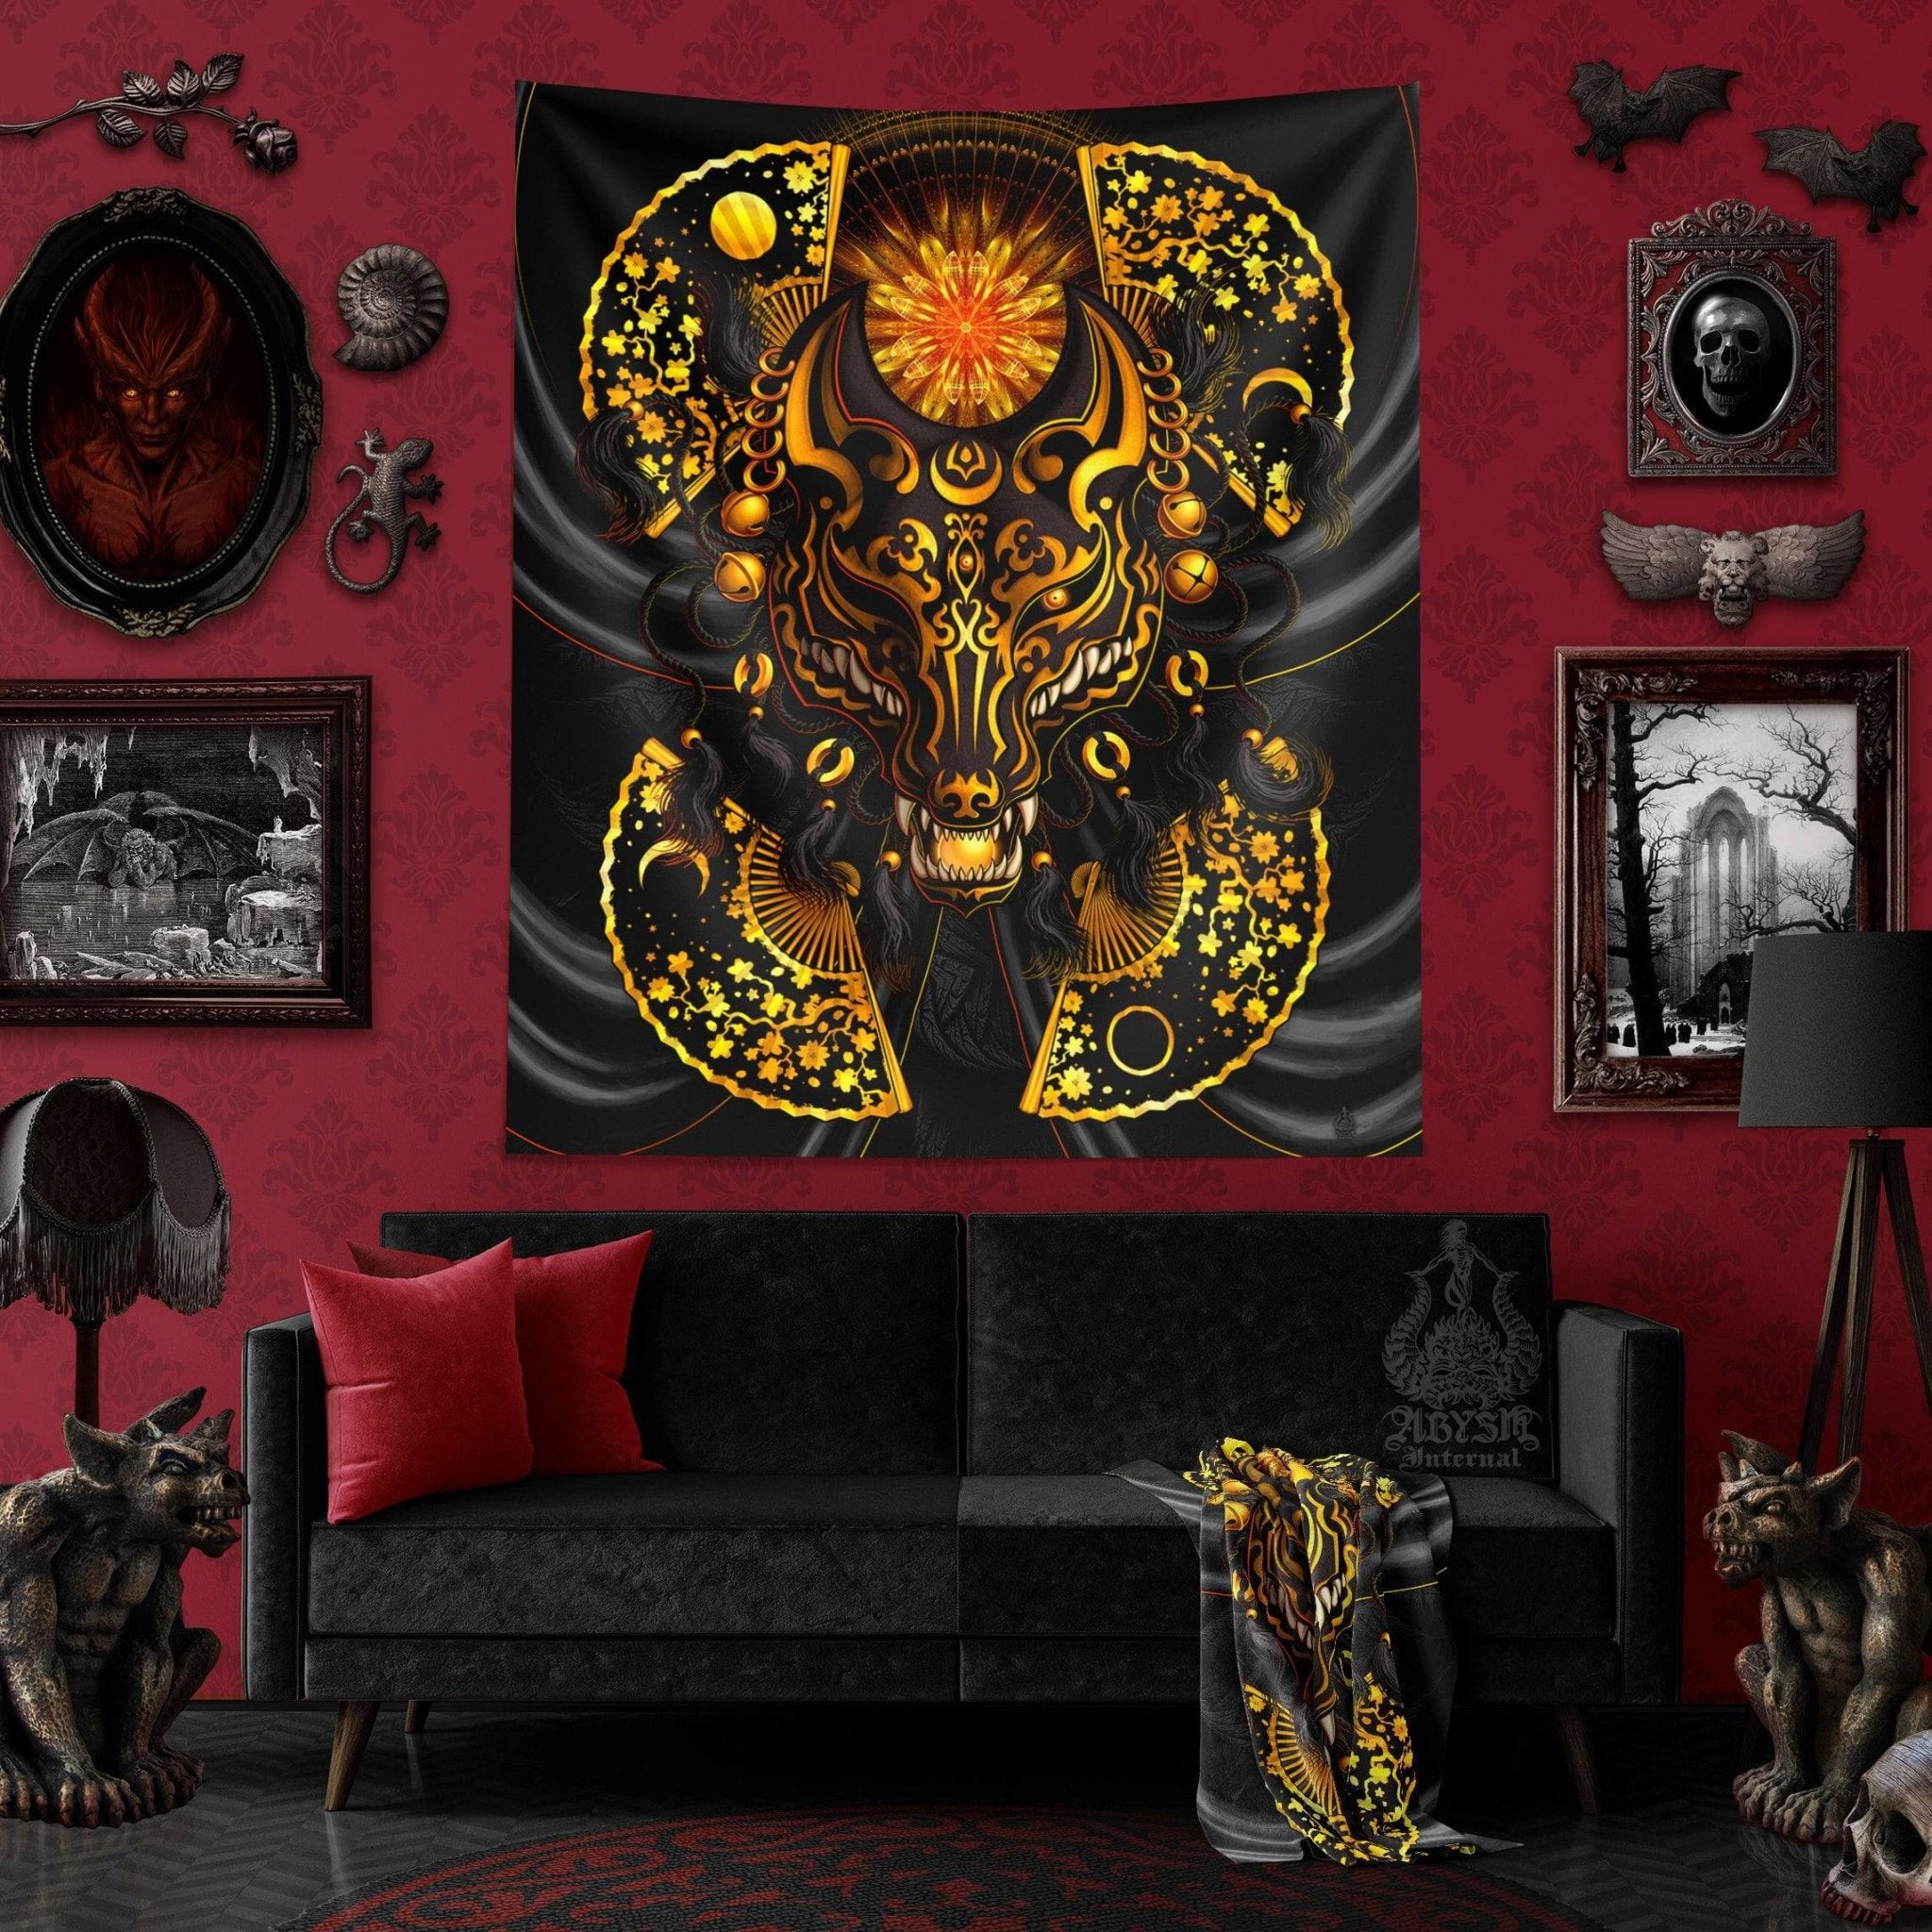 Kitsune Tapestry, Japanese Wall Hanging, Anime and Gamer Home Decor, Art Print, Okami, Fox Mask - Black & Gold - Abysm Internal